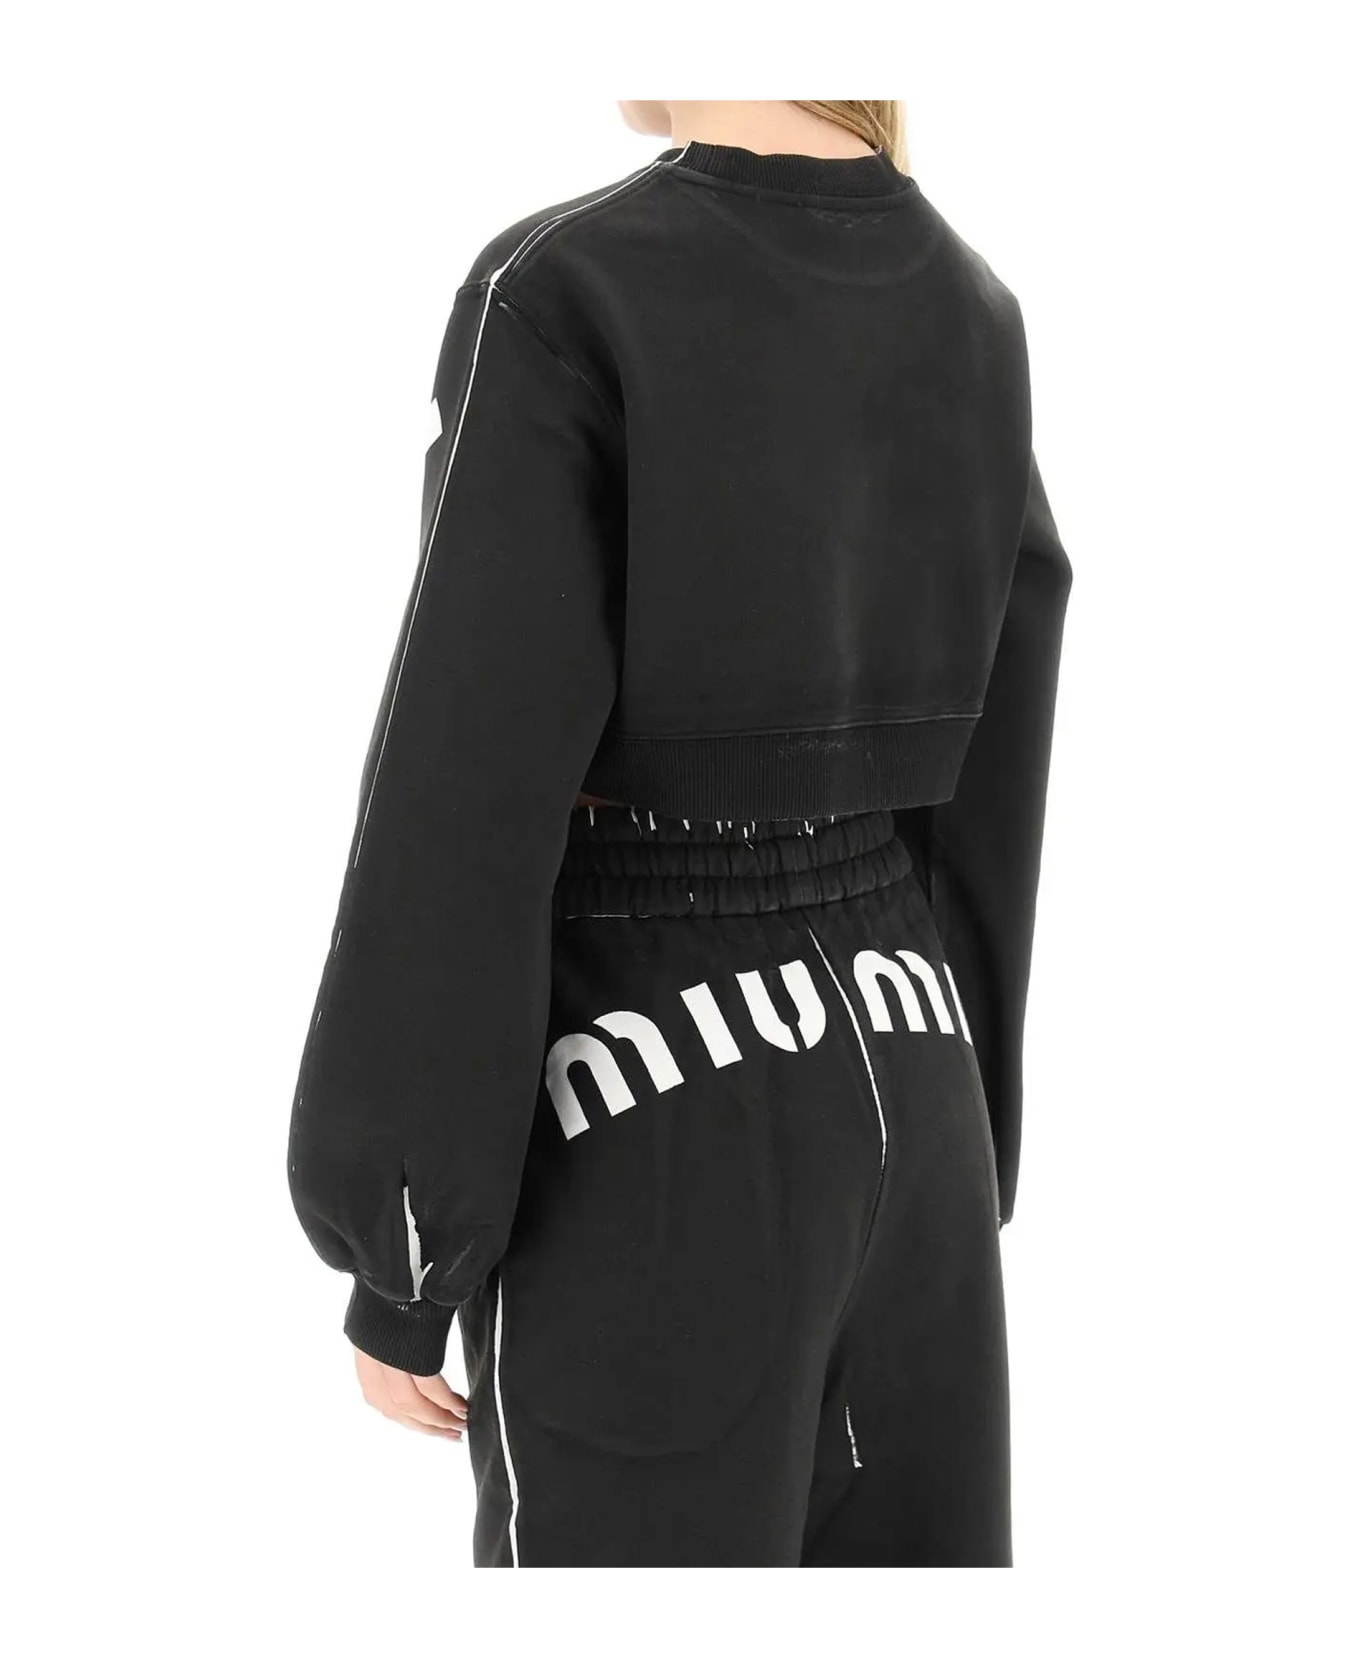 Miu Miu Cropped Logo Sweatshirt - Black